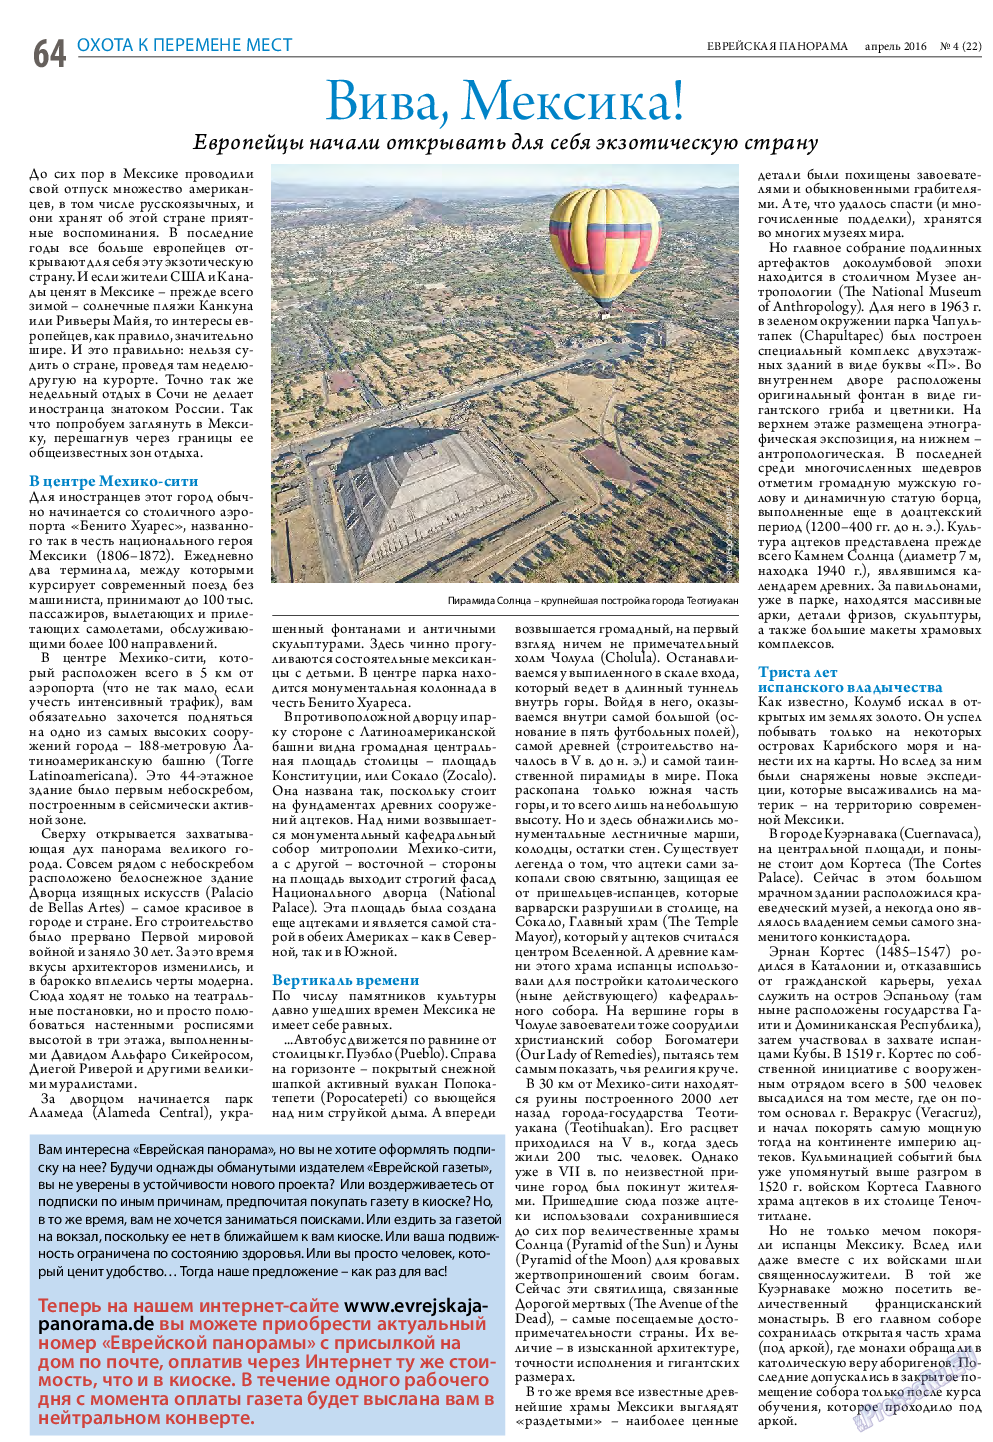 Еврейская панорама, газета. 2016 №4 стр.64